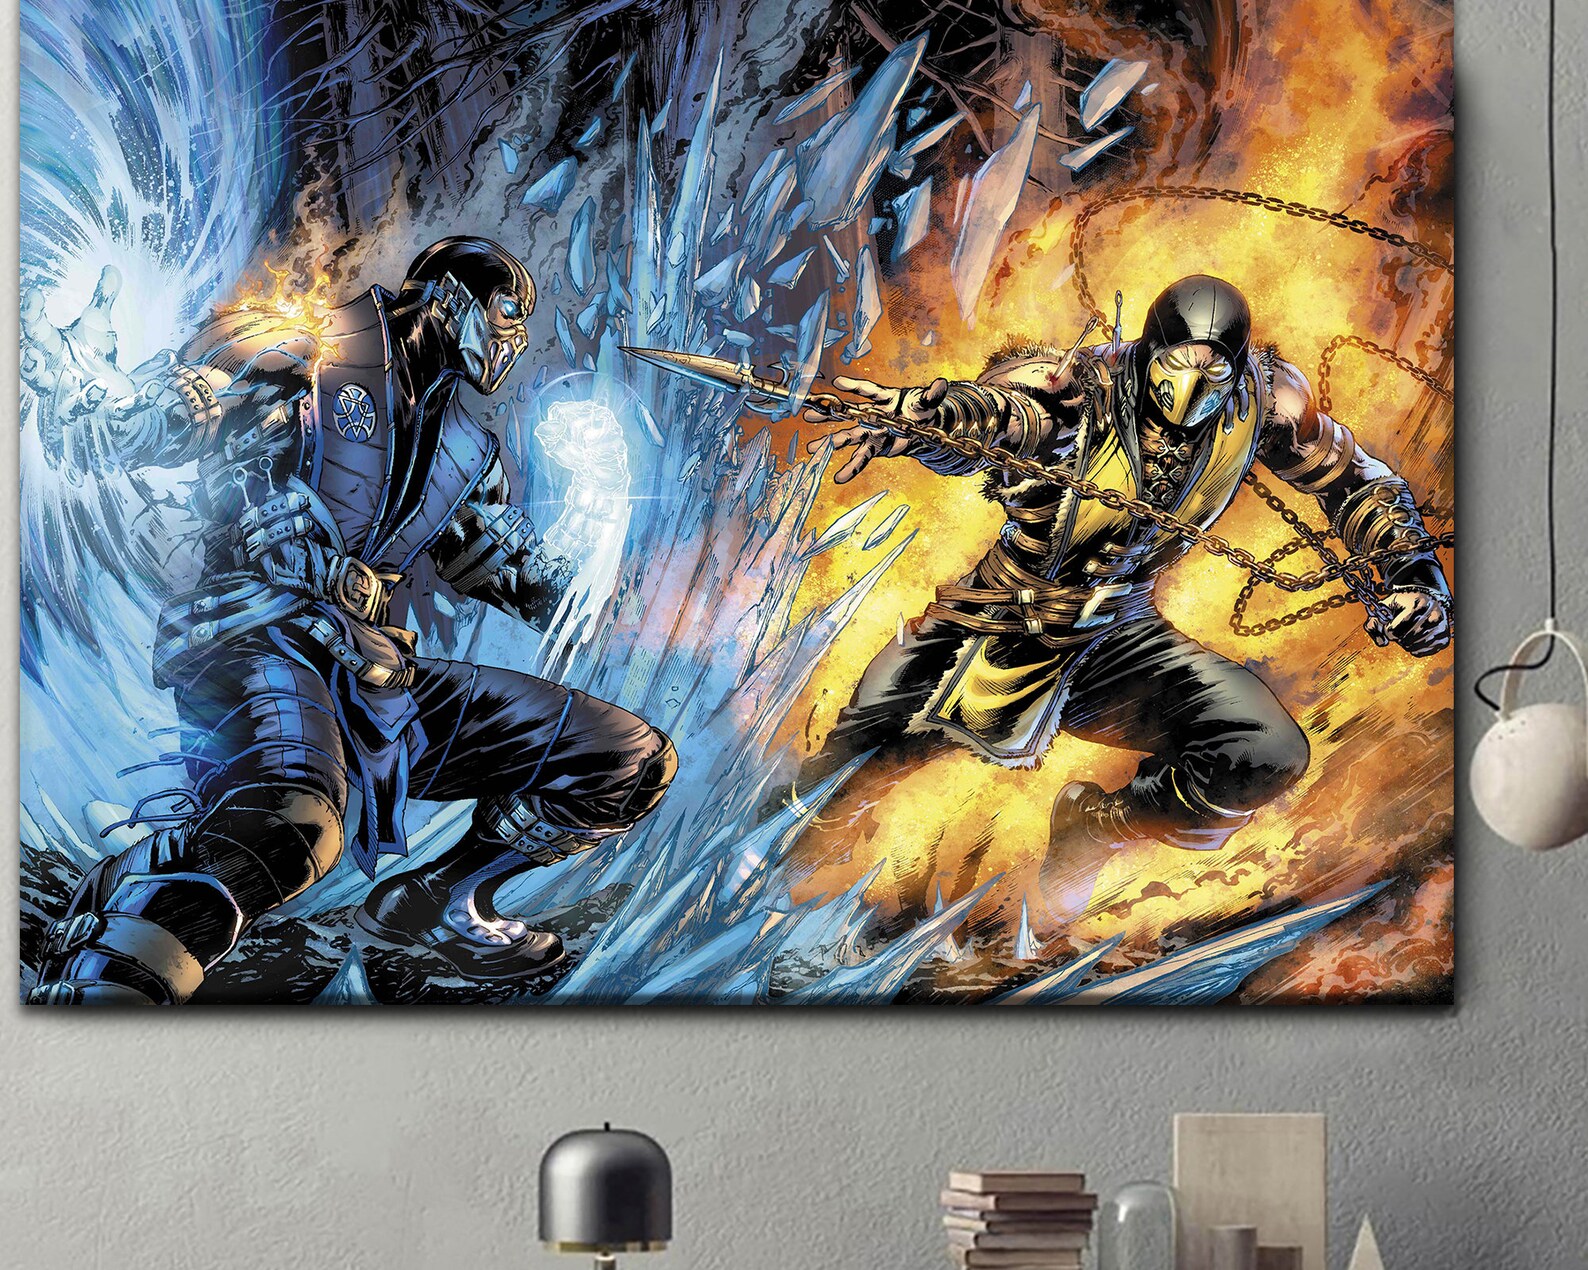 Sub Zero Vs Scorpion Poster Mortal Kombat Movie Art Print Etsy